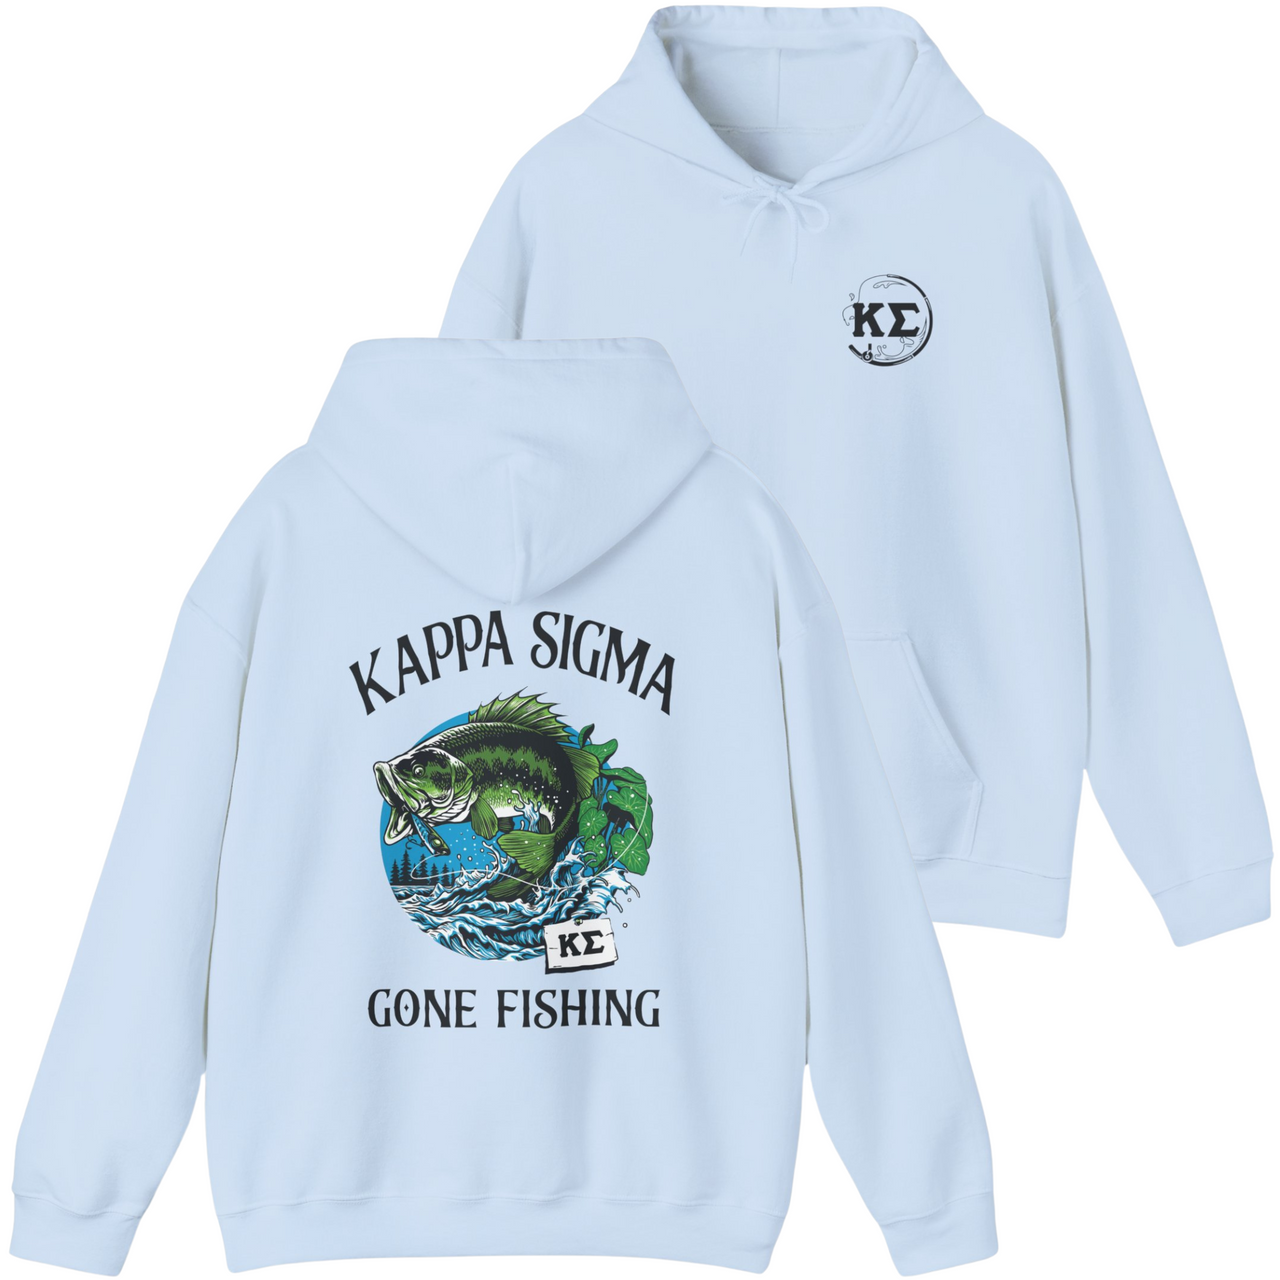 Kappa Sigma Graphic Hoodie | Gone Fishing